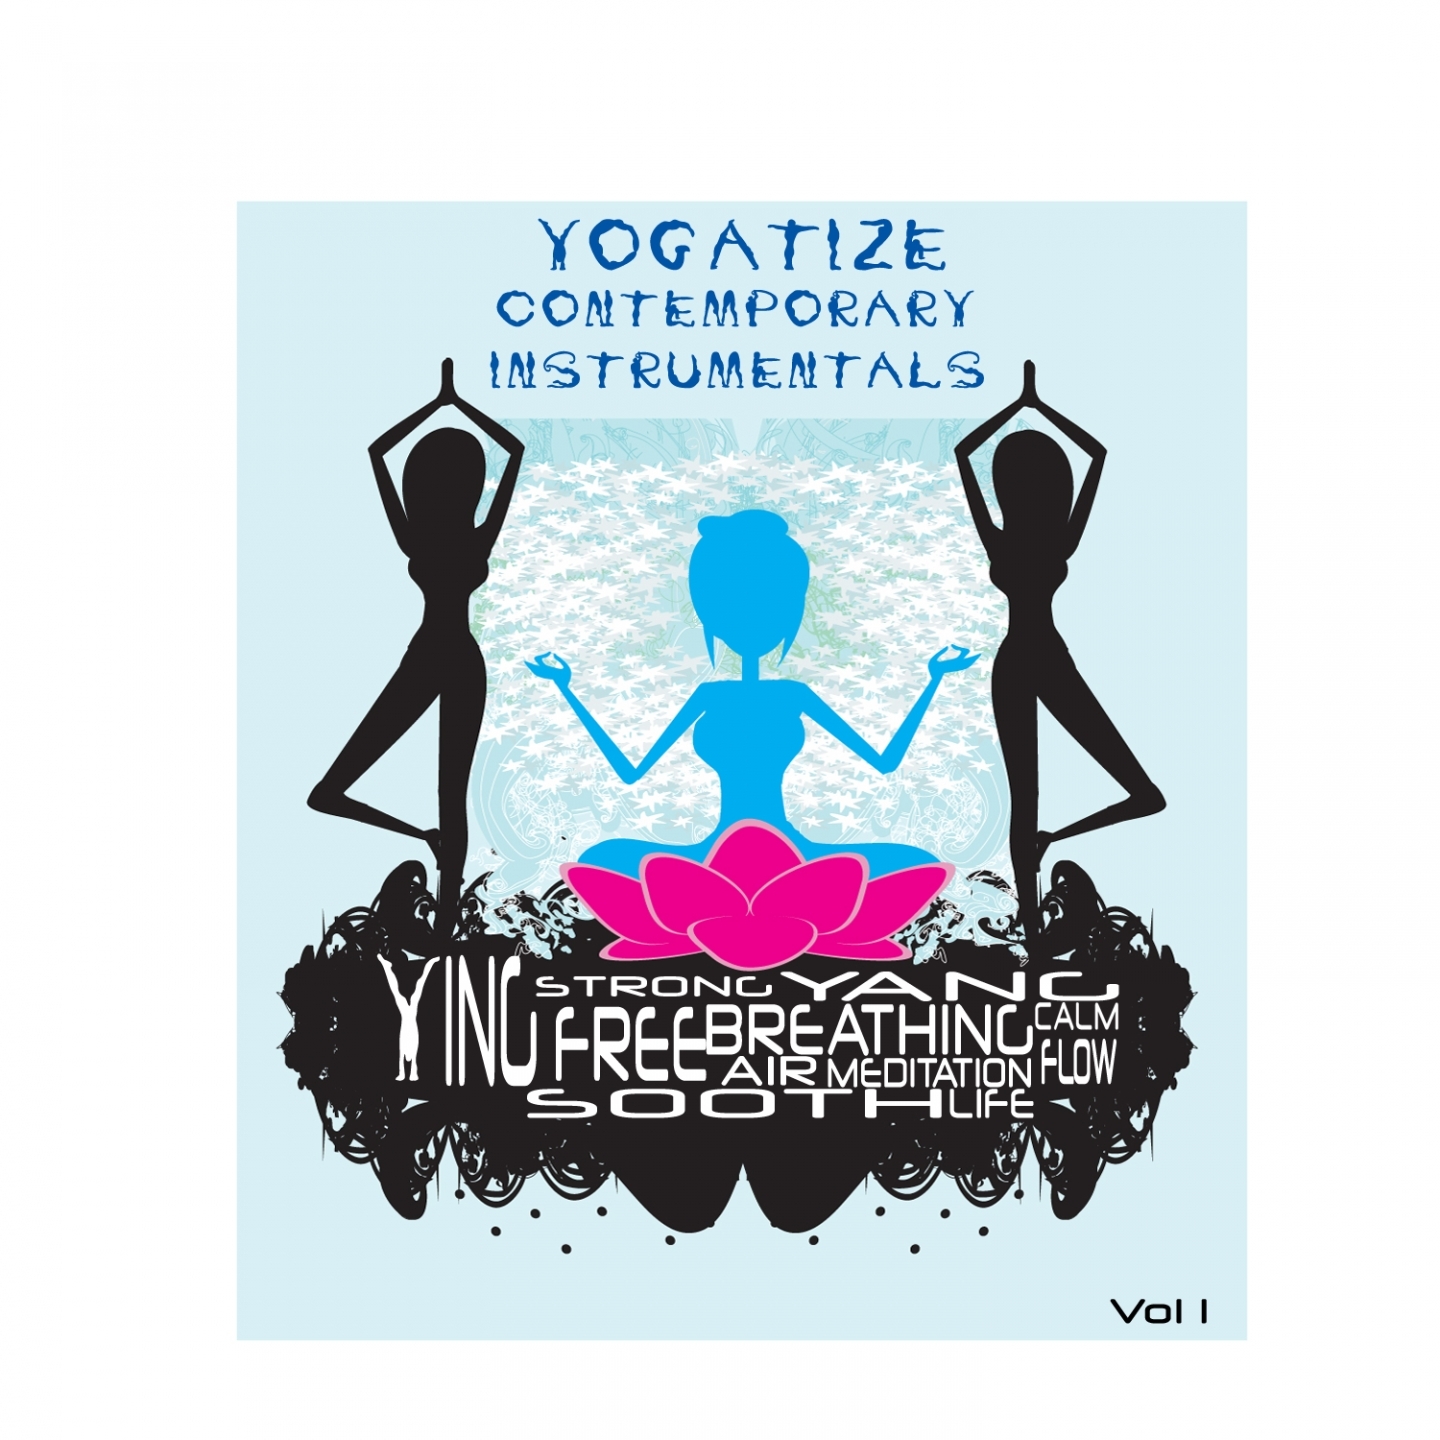 Yogatize - Instrumentals - Contemporary, Vol. 1